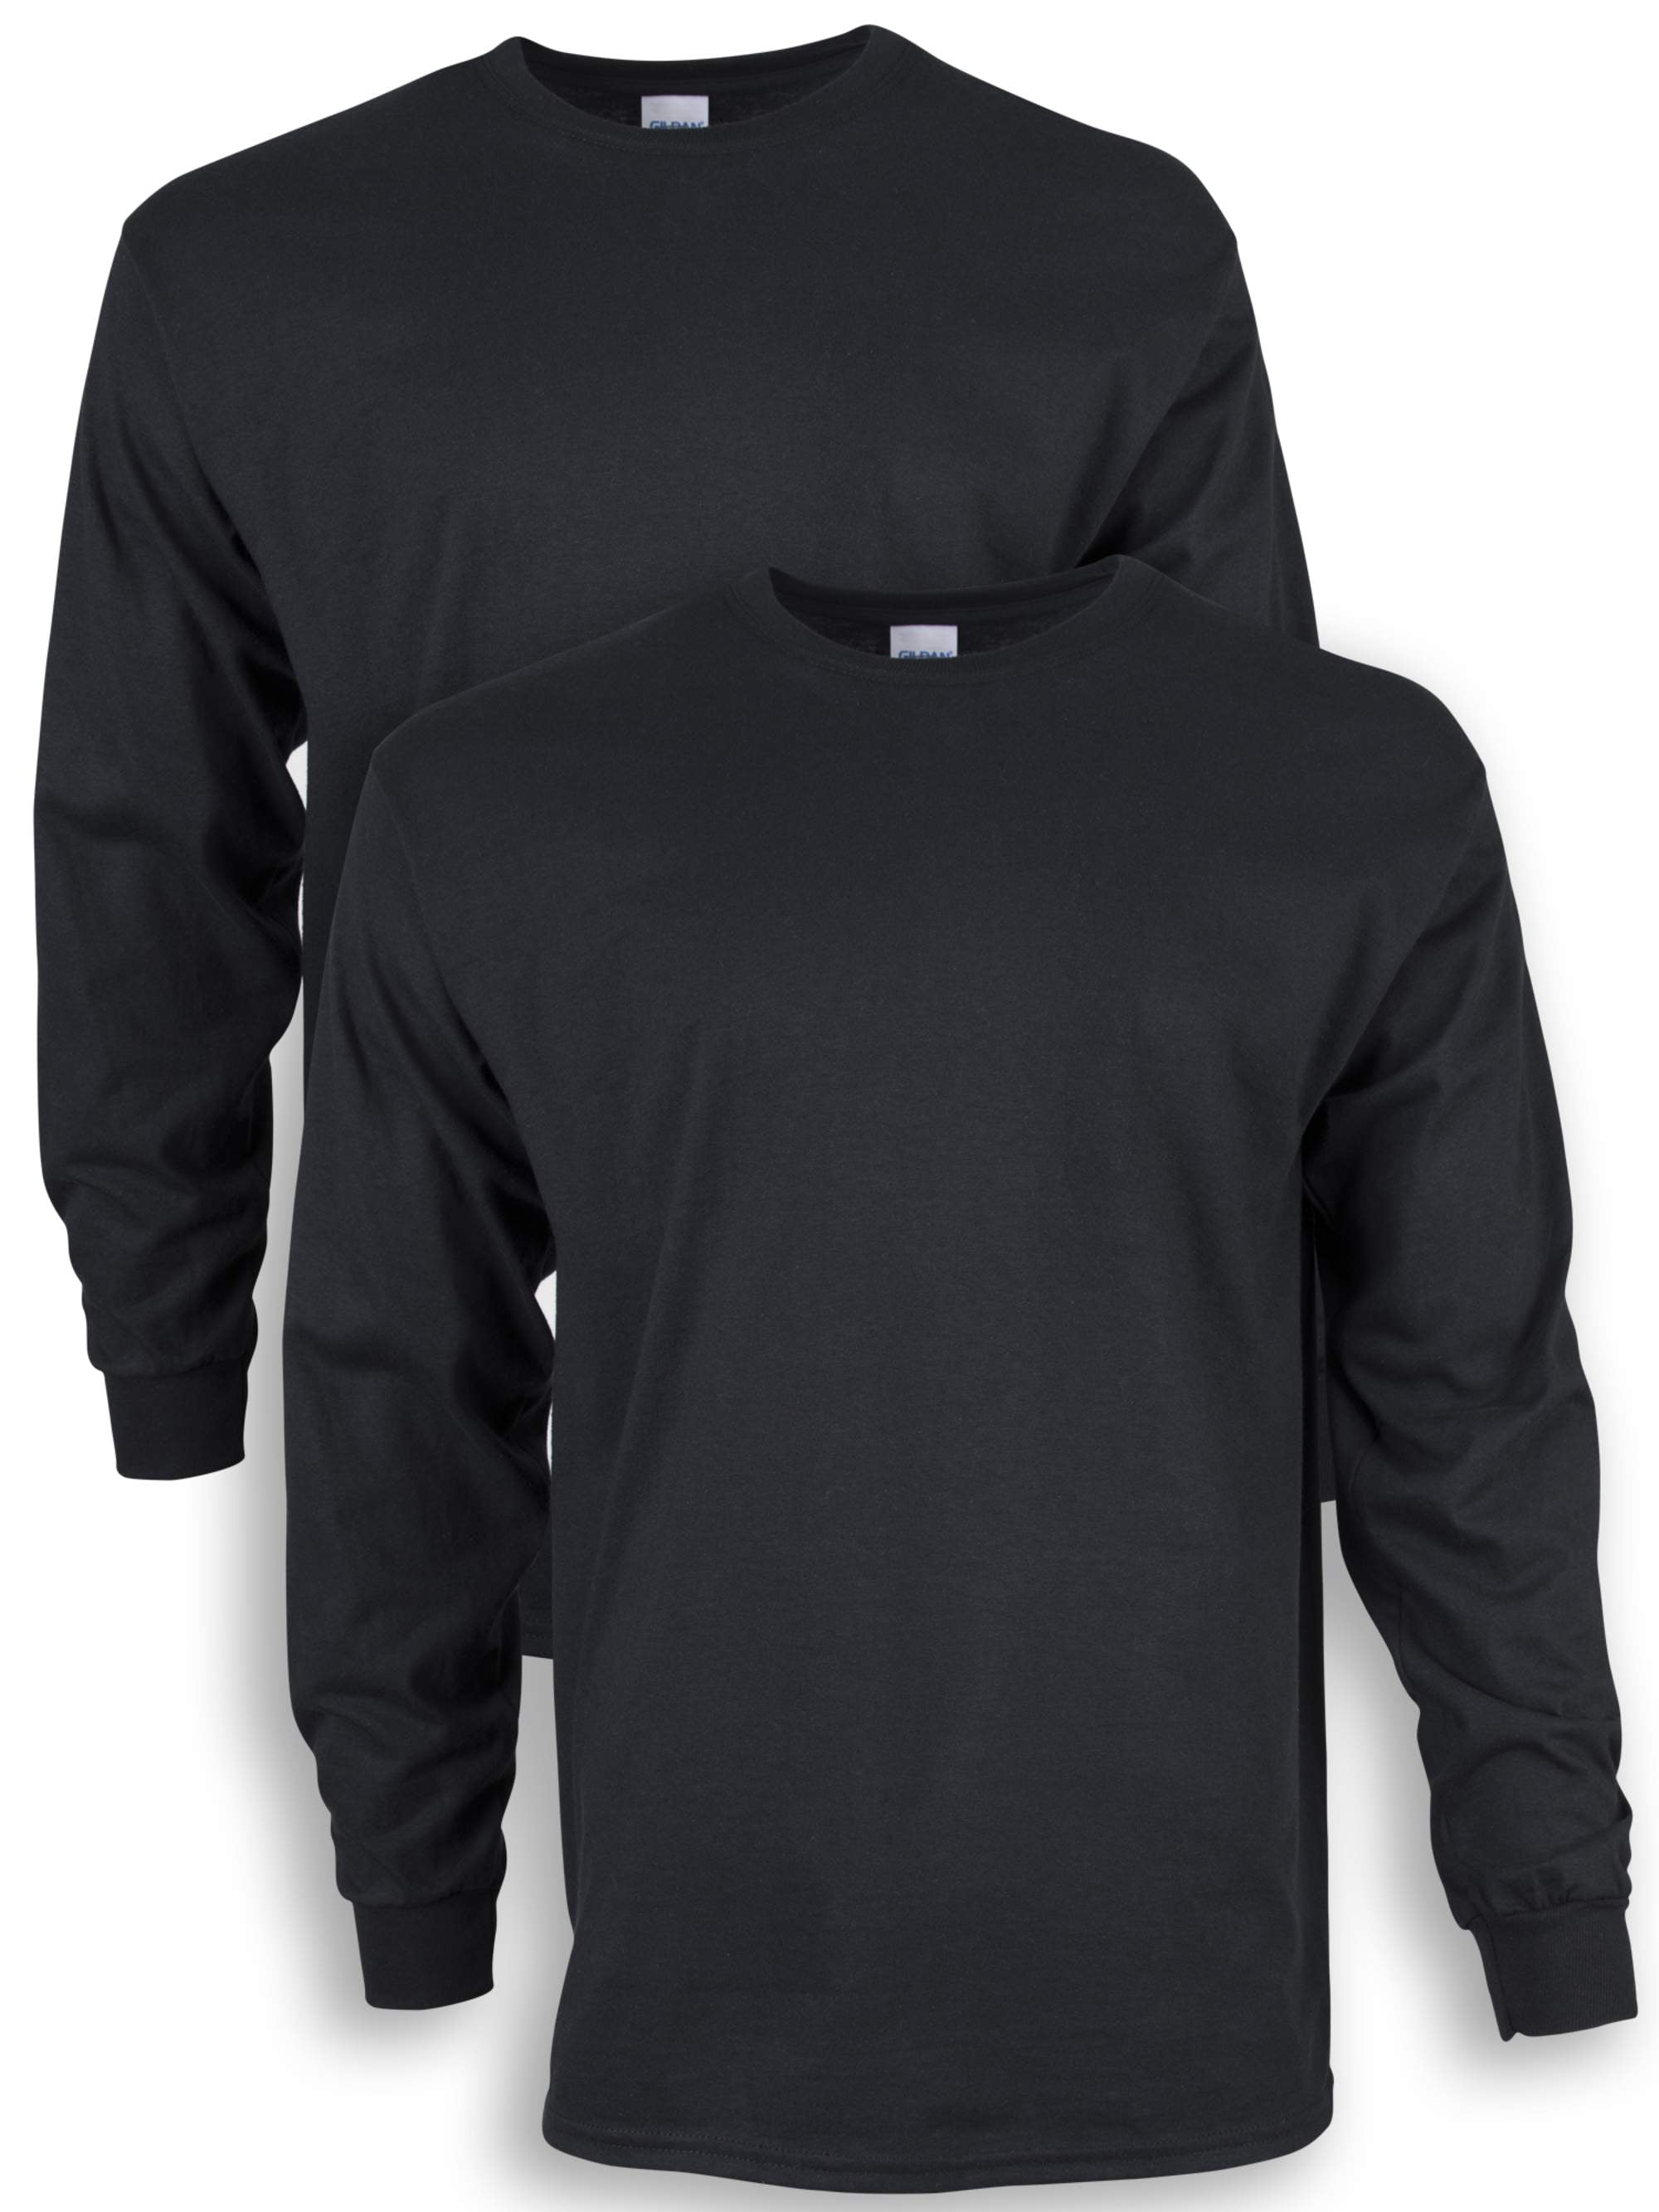 Paragon - Bahama Performance Hooded Long Sleeve T-Shirt - 220 - Aluminum -  Size: 3XL 